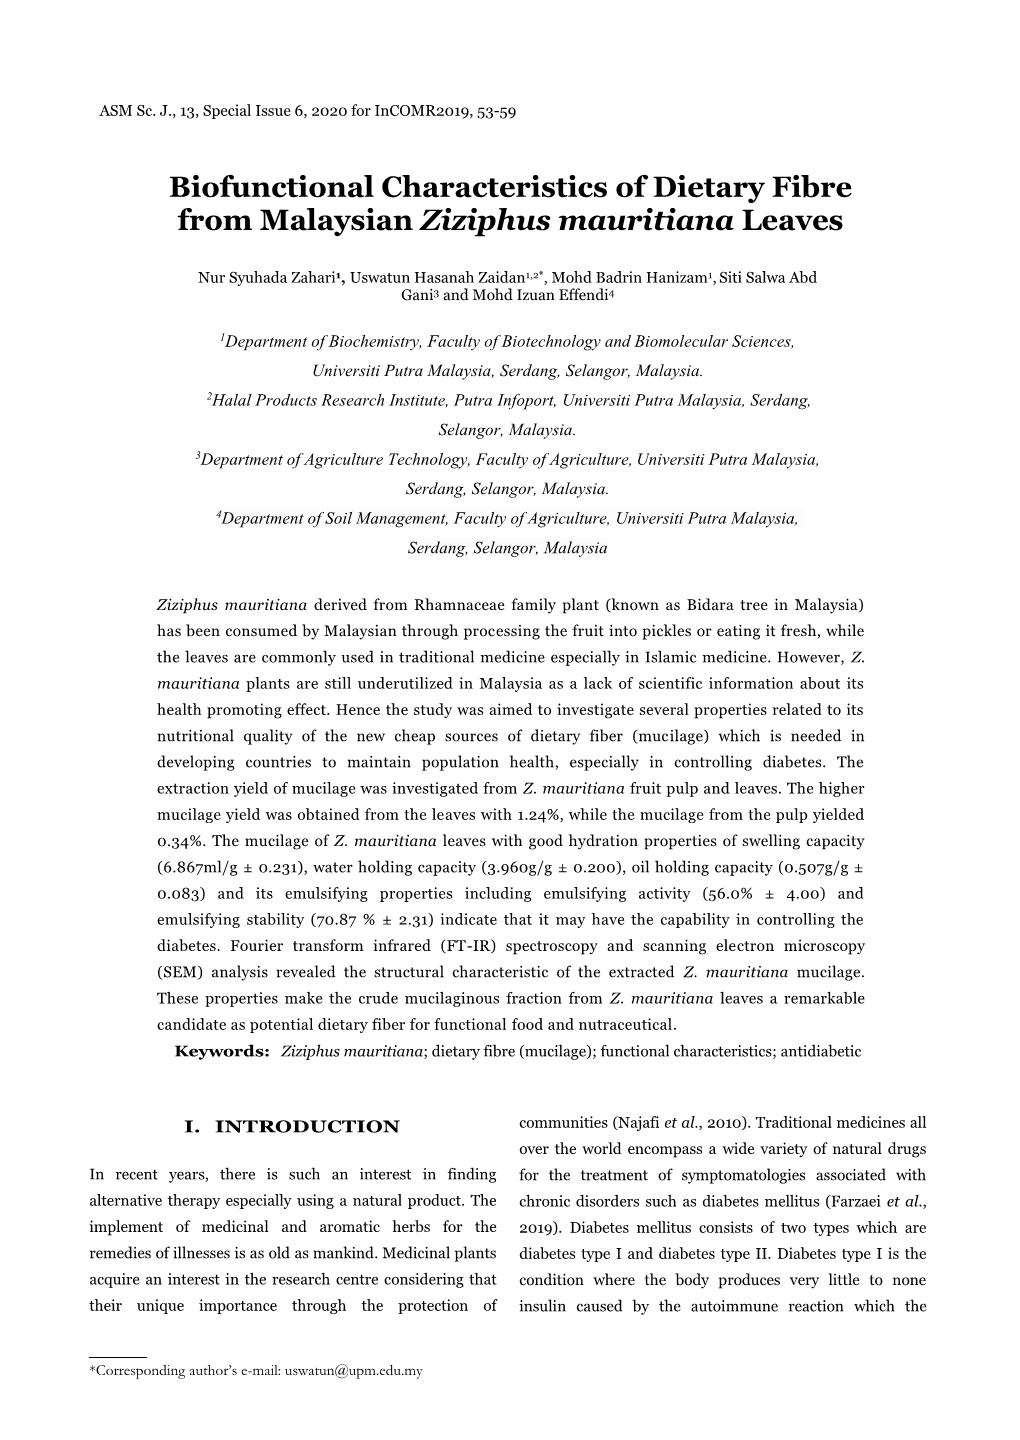 Biofunctional Characteristics of Dietary Fibre from Malaysian Ziziphus Mauritiana Leaves